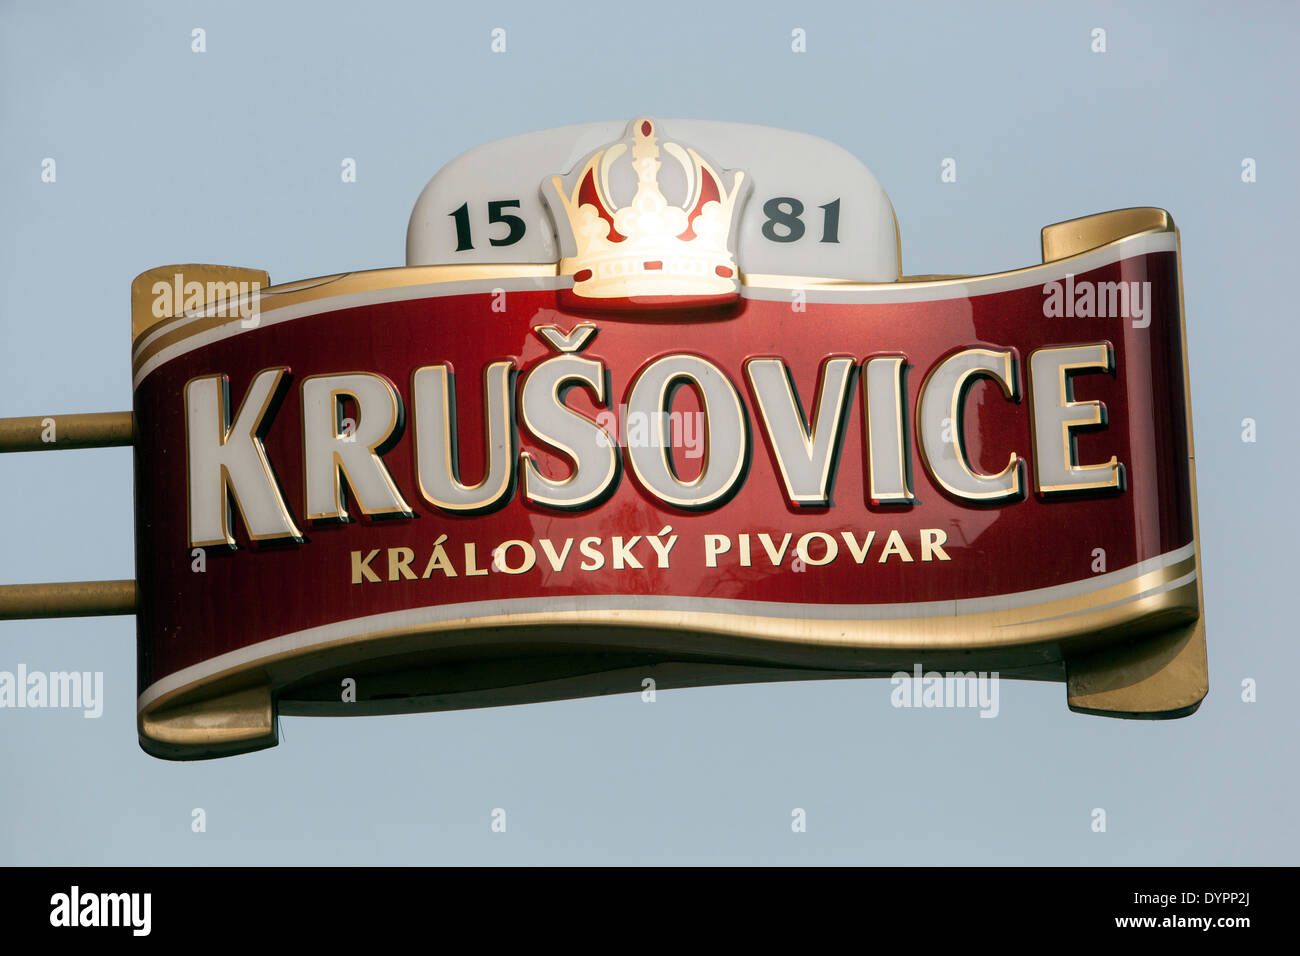 Czech beer sign Krusovice, icon brand, Czech Republic Stock Photo